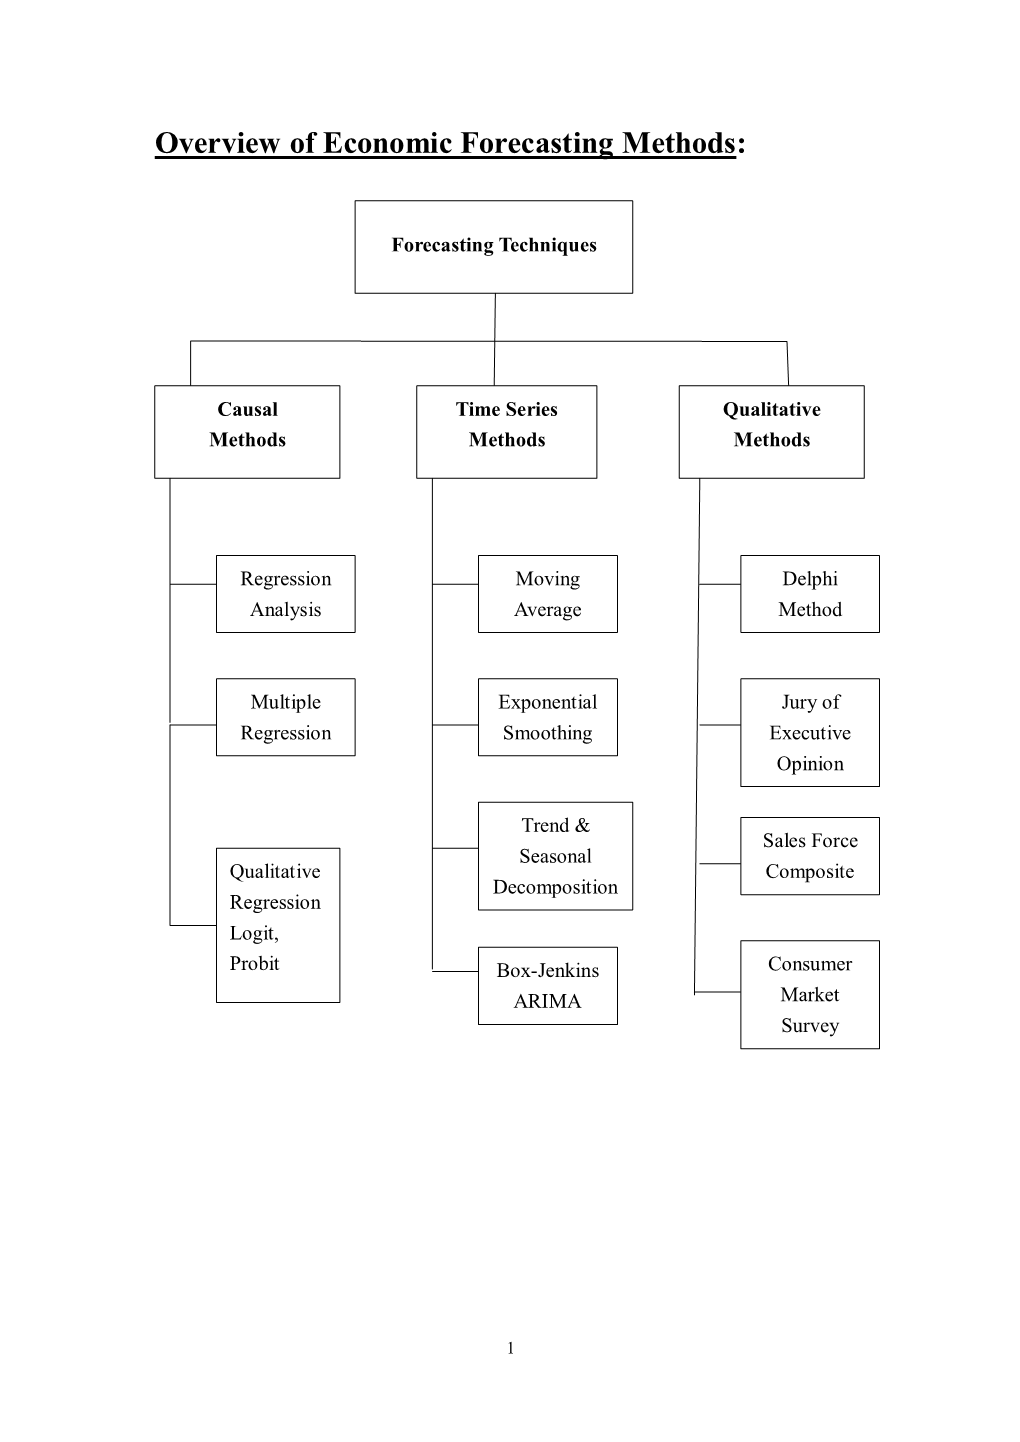 Overview of Economic Forecasting Methods